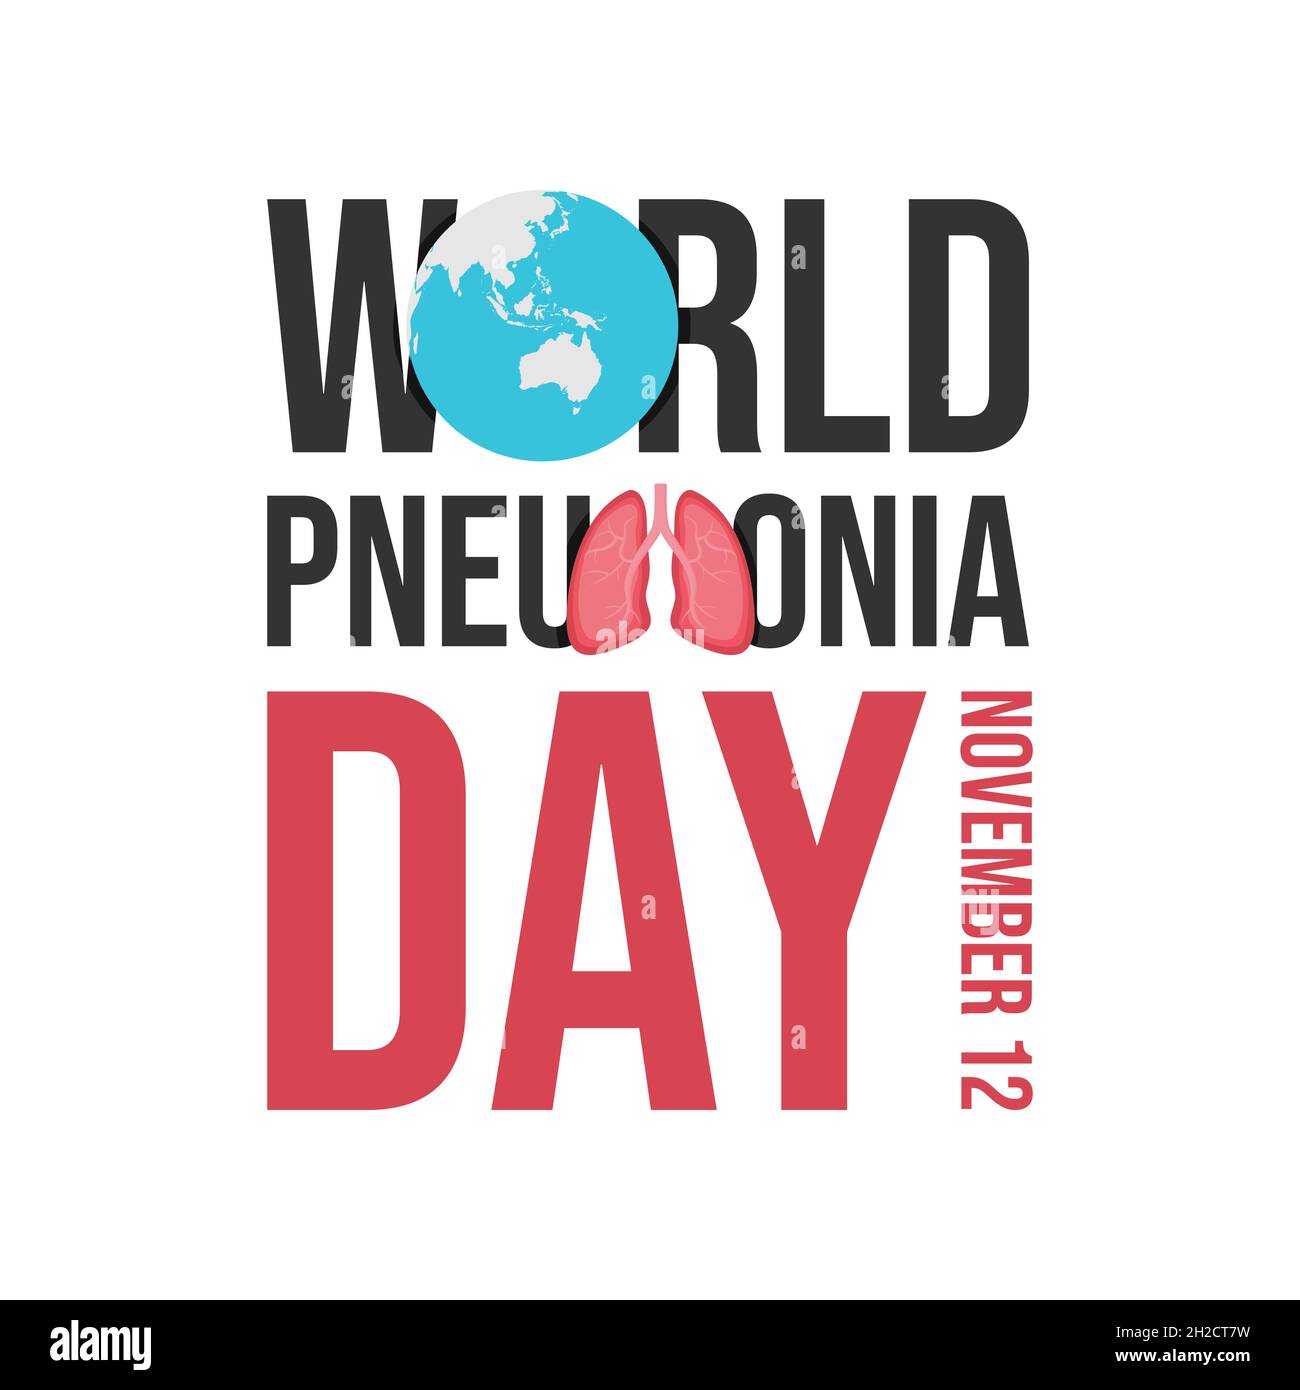 World pneumonia day concept background design vector image. Vector graphic of world pneumonia day good for world pneumonia day celebration Stock Vector